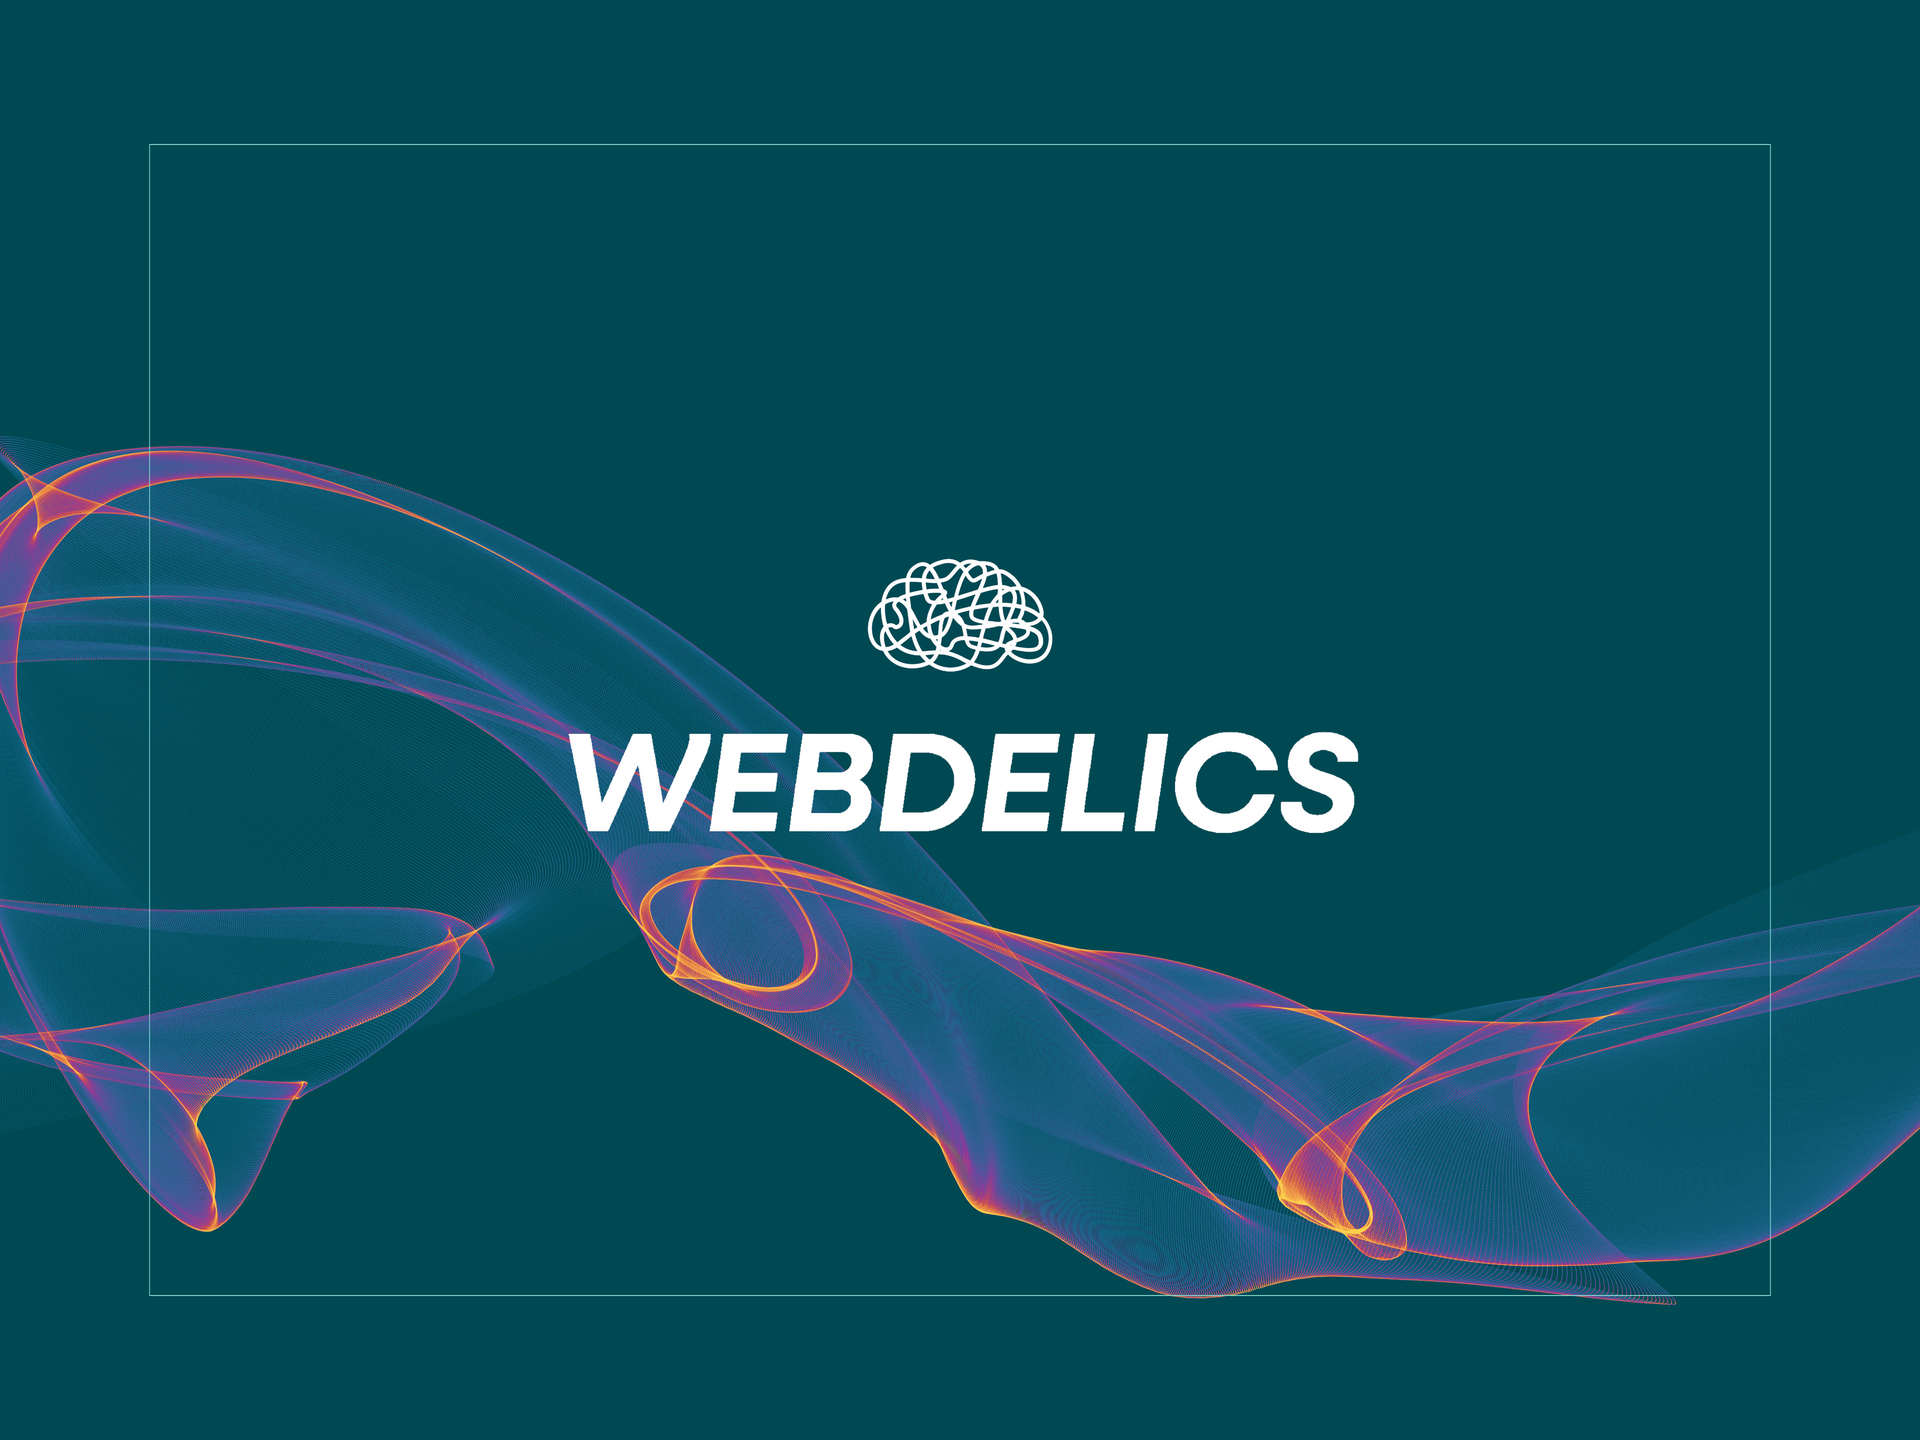 PITCH DECK: Webdelics